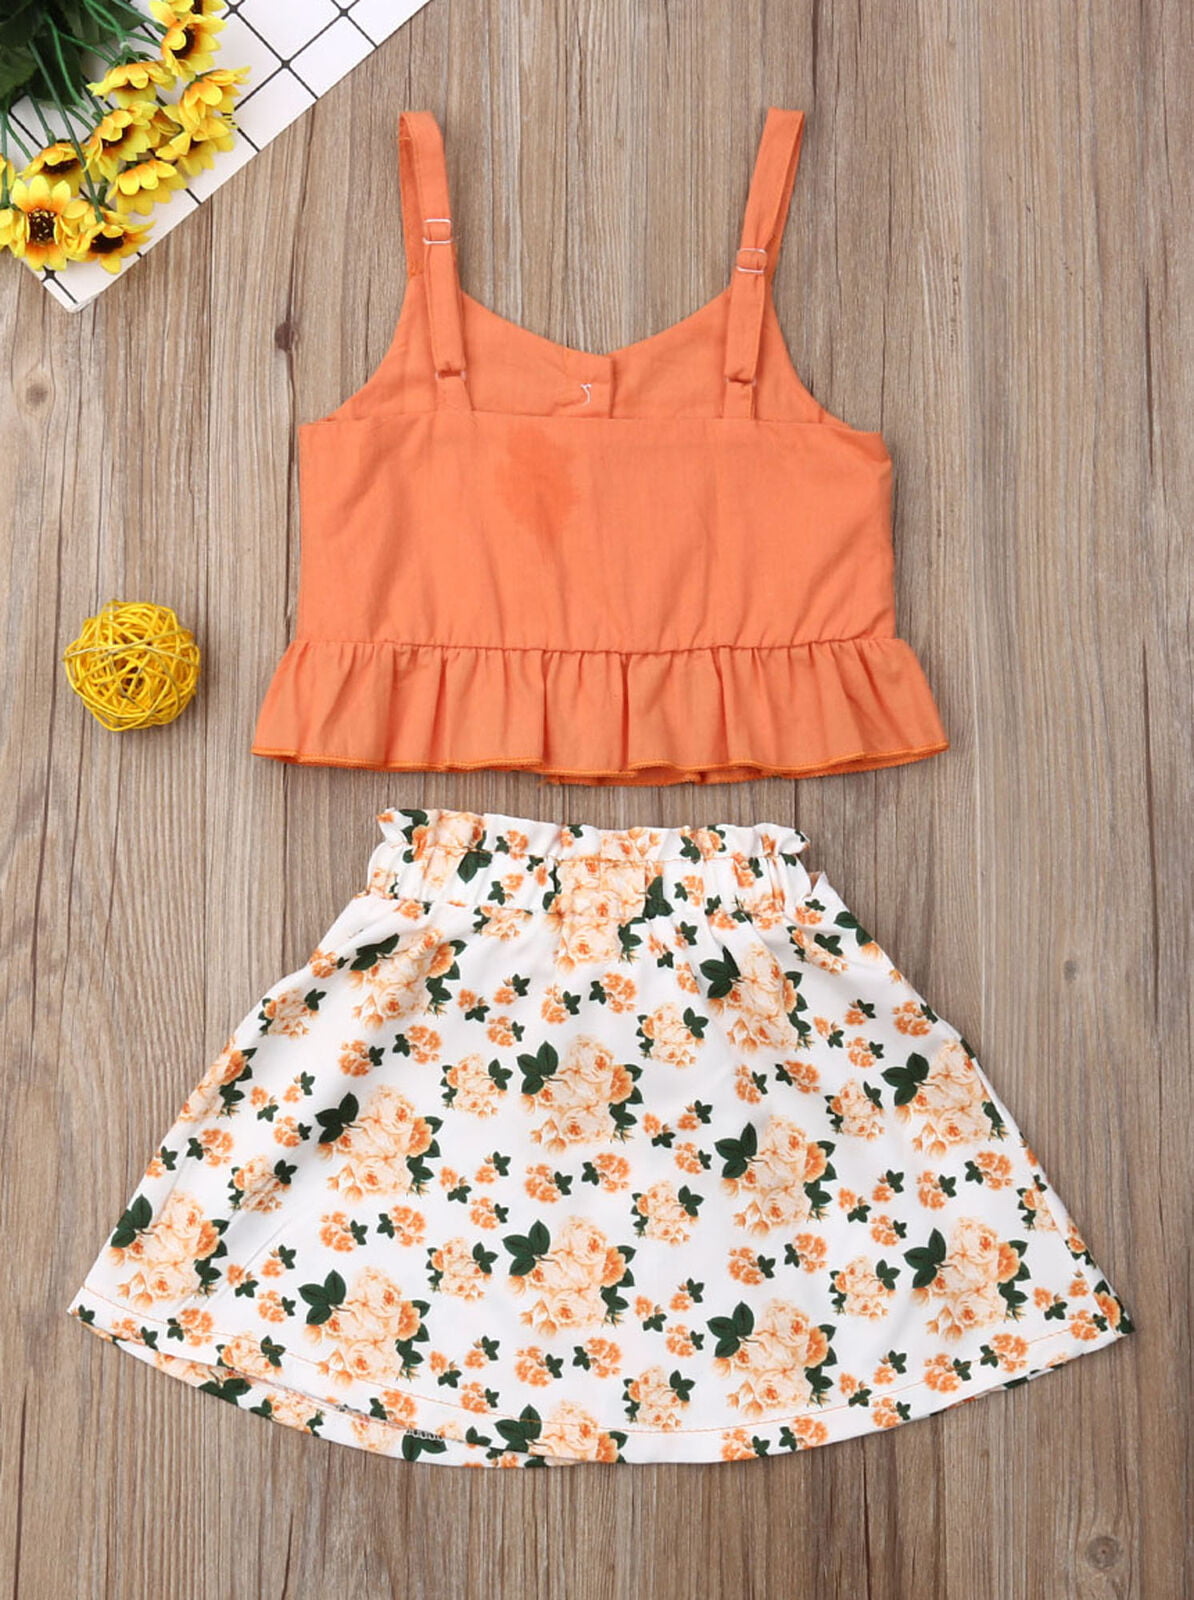 Toddler Baby Girl Floral Outfit Off Shoulder Crop Tops Tanks & Shorts Skirt Set Newborn Infant Summer Clothes 